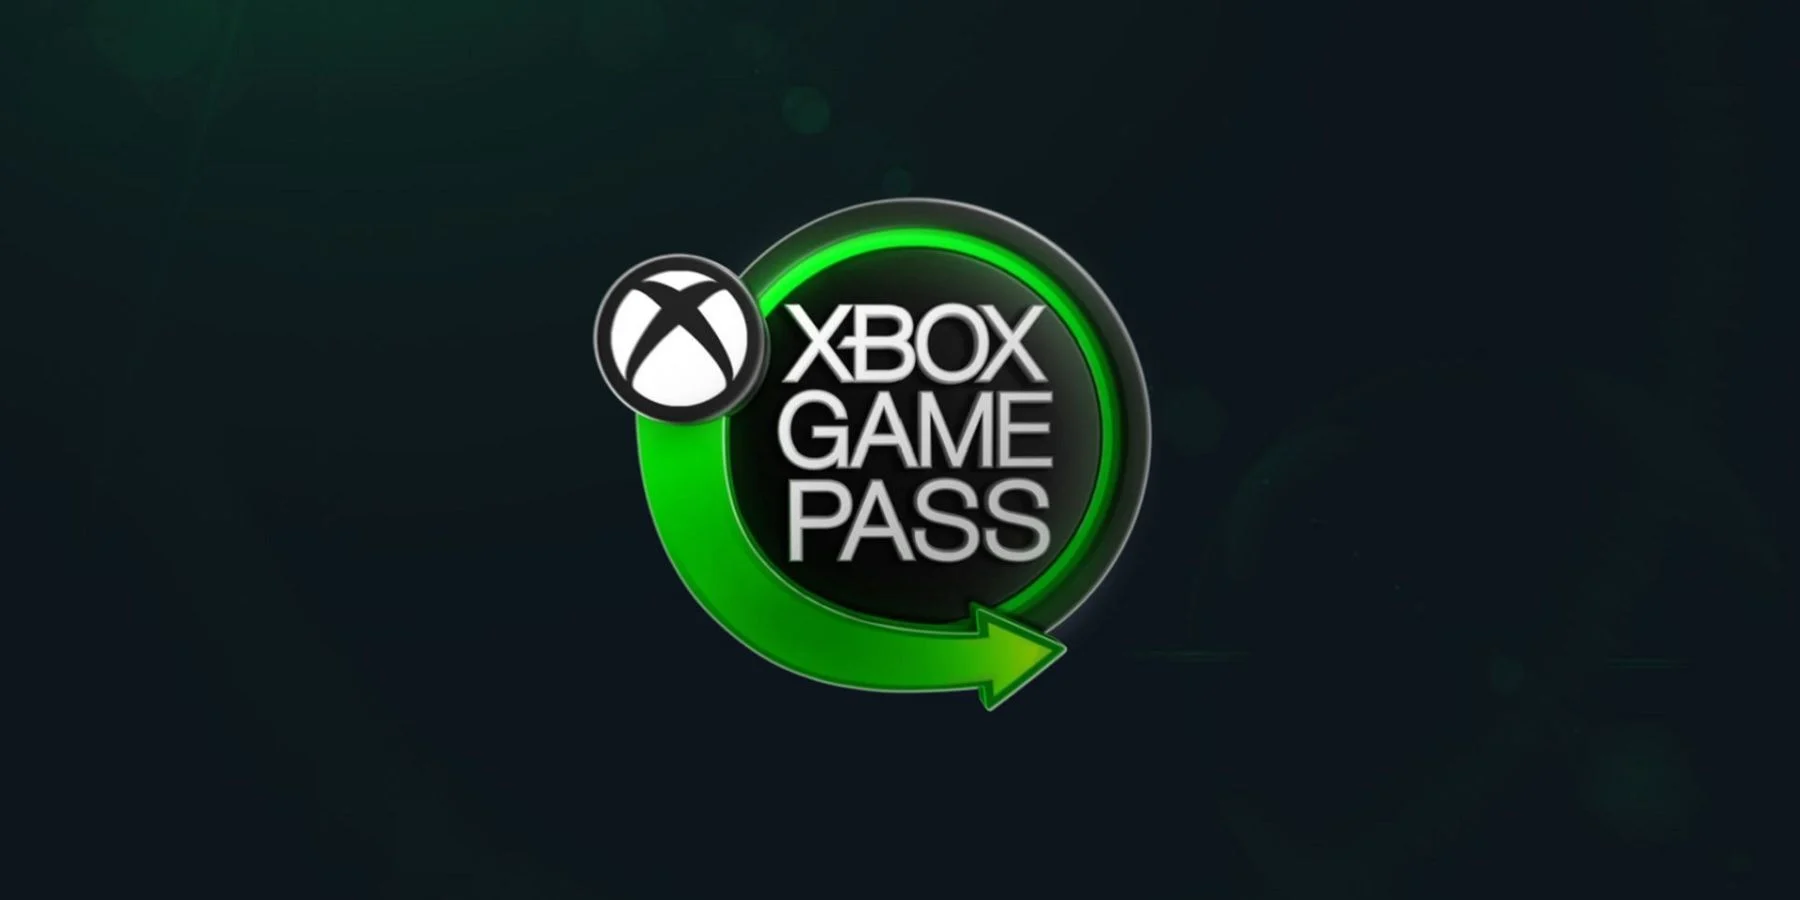 xbox-game-pass-logo-with-black-background.jpg